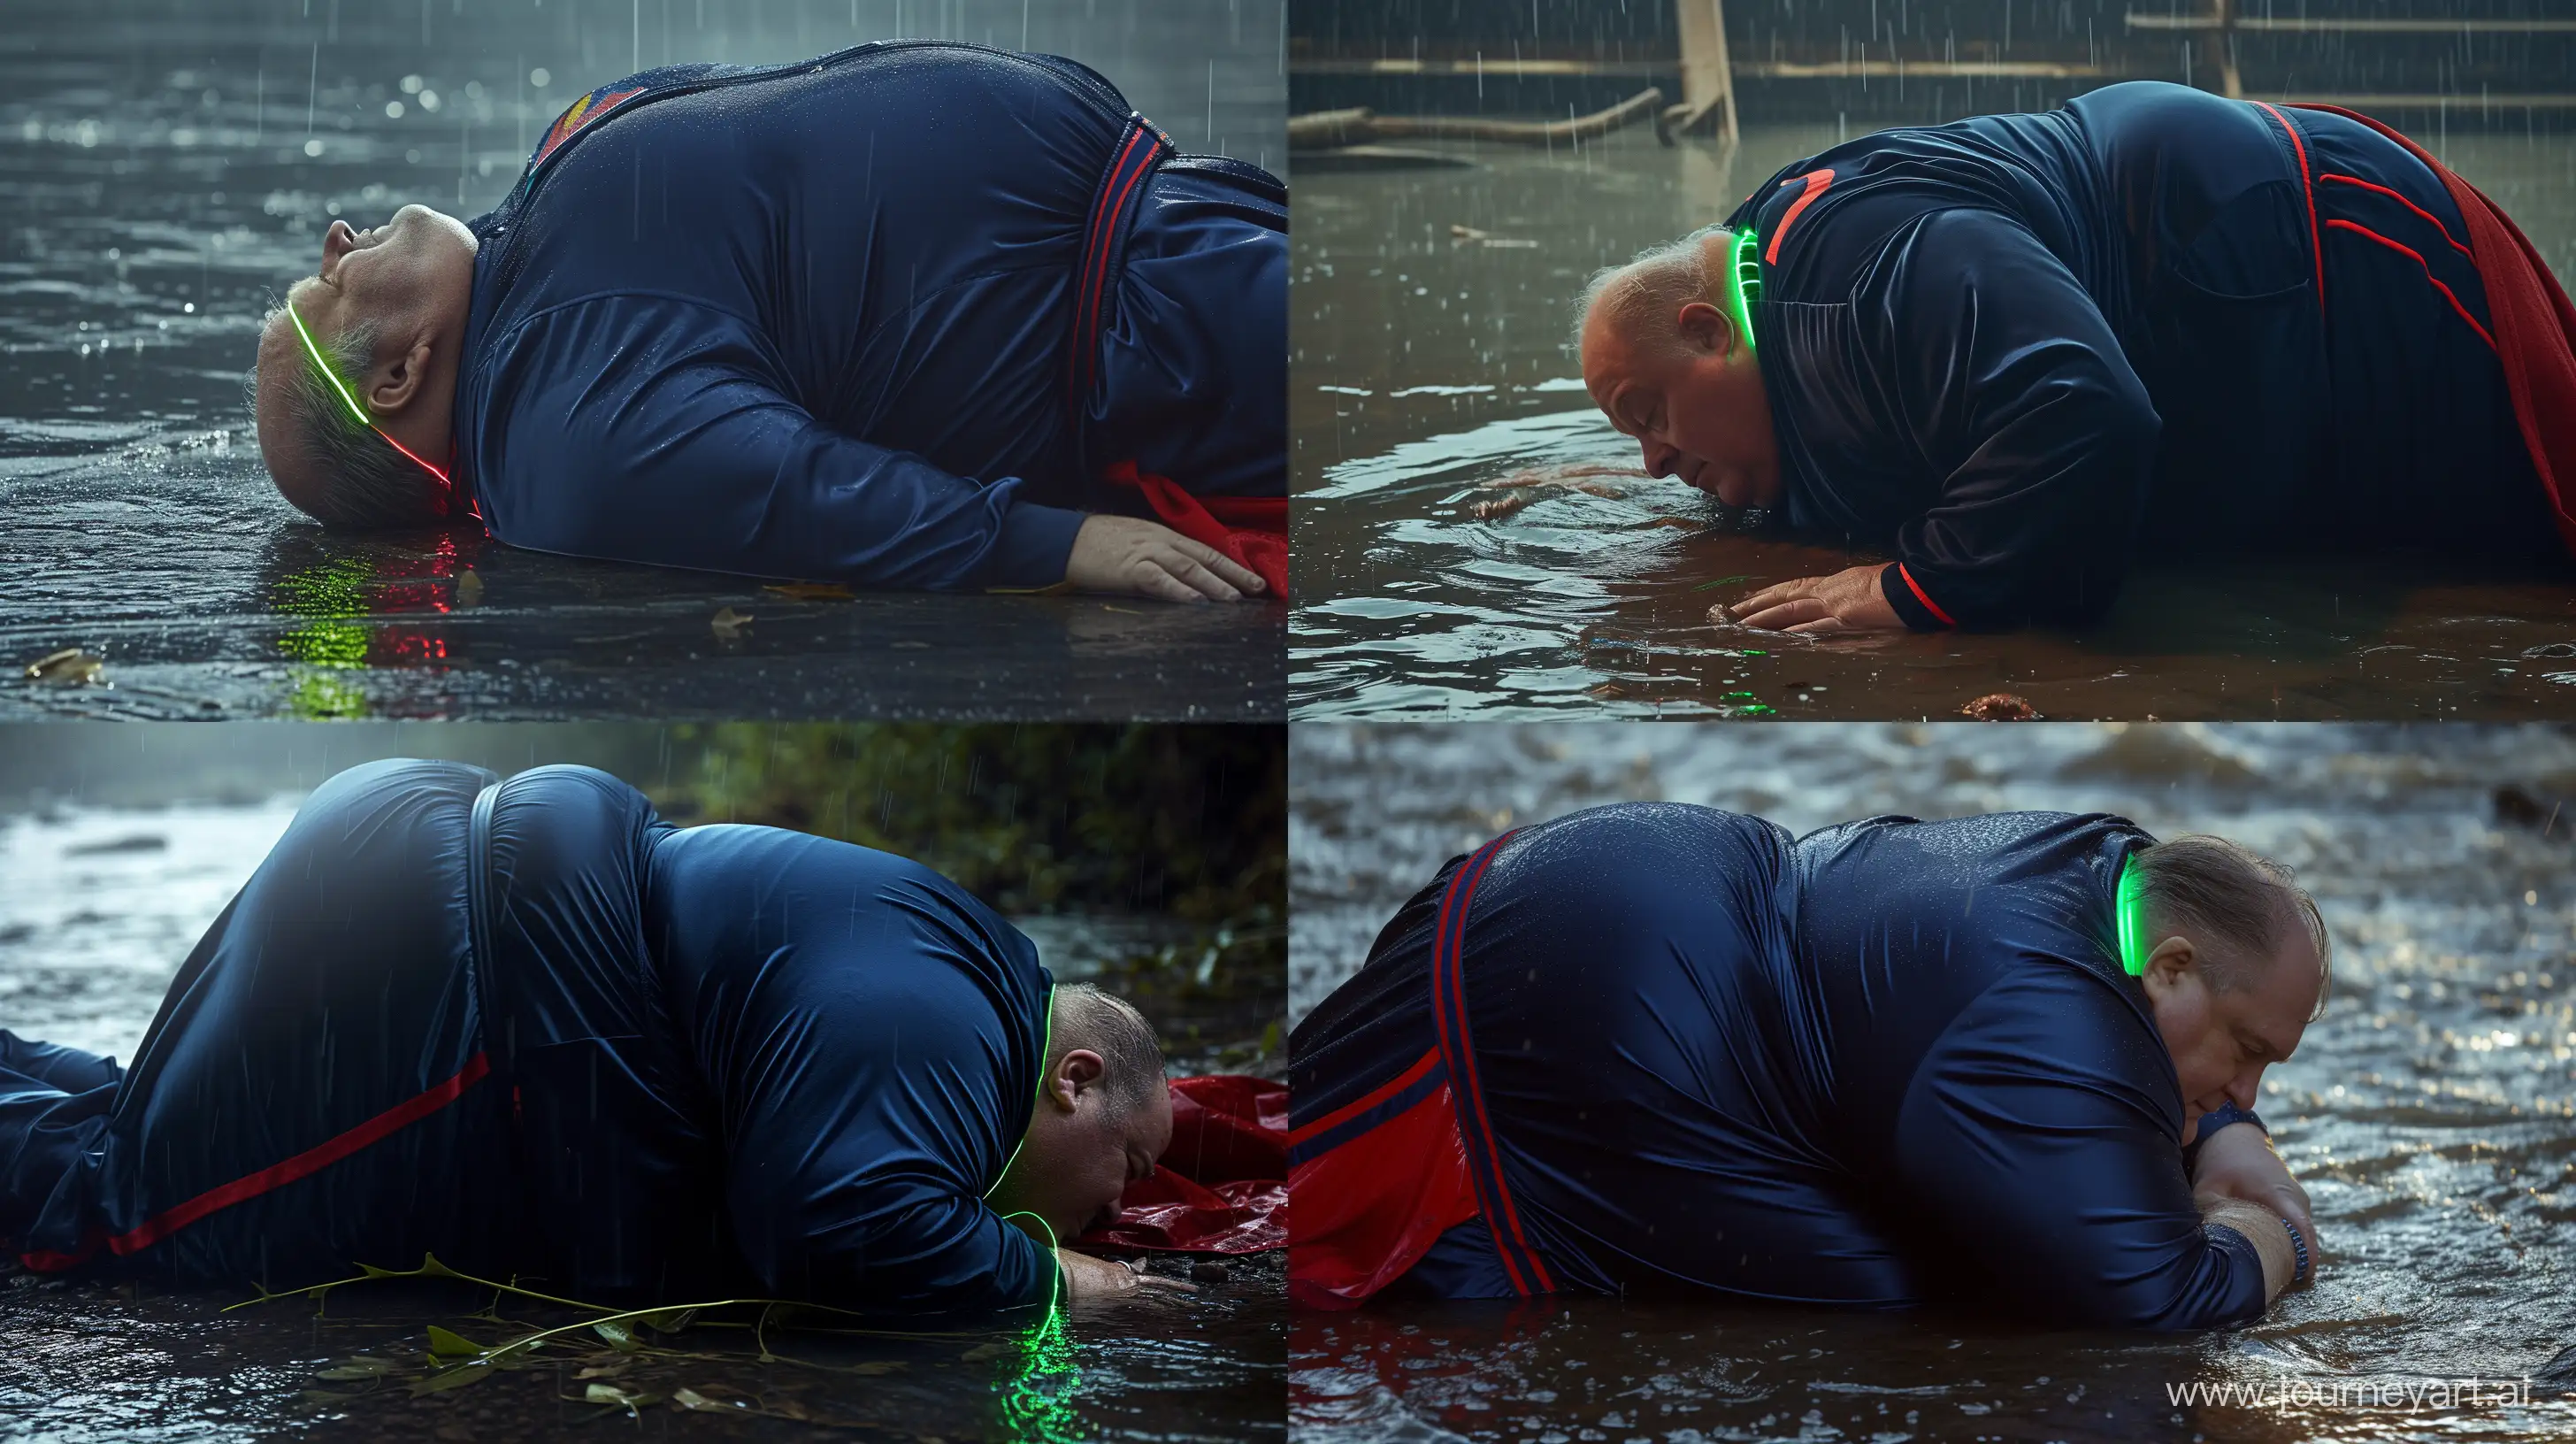 Eccentric-Scene-Overweight-Man-in-Vintage-Superman-Costume-Tightens-Neon-Dog-Collar-by-the-River-in-Rain